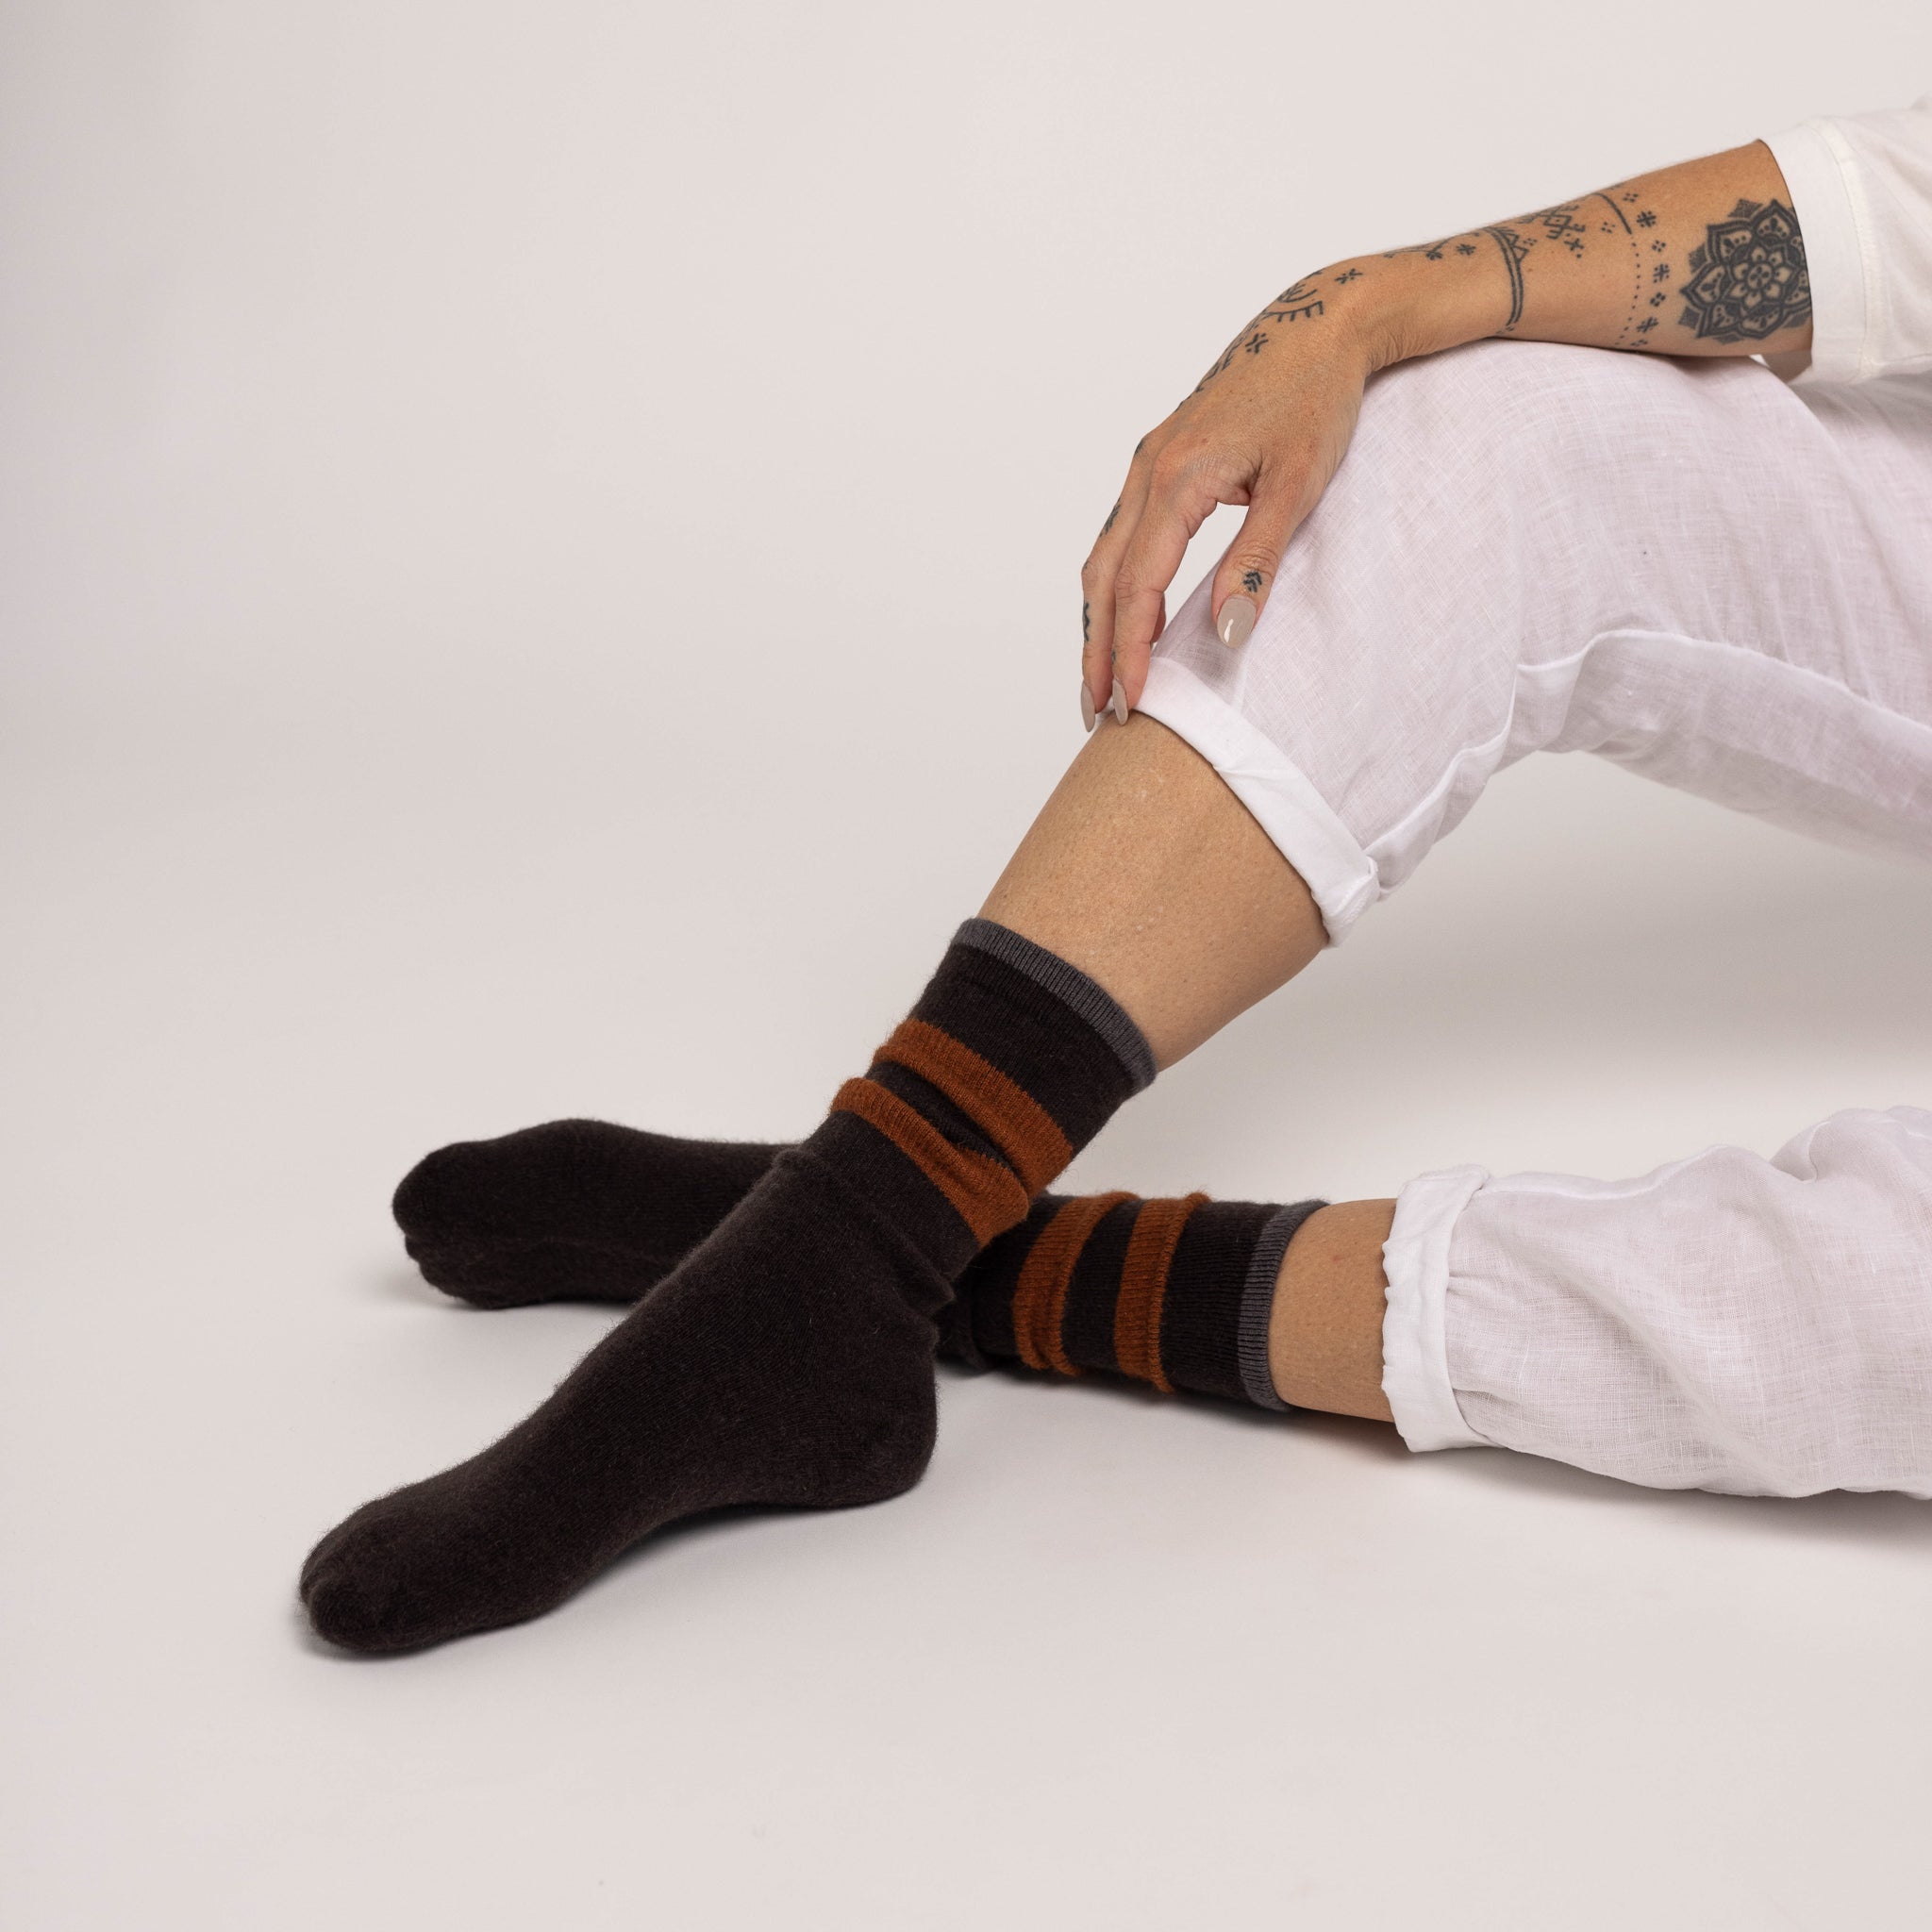 Possum Merino Wool DUNEDIN Three Stripes Socks, Seal Brown